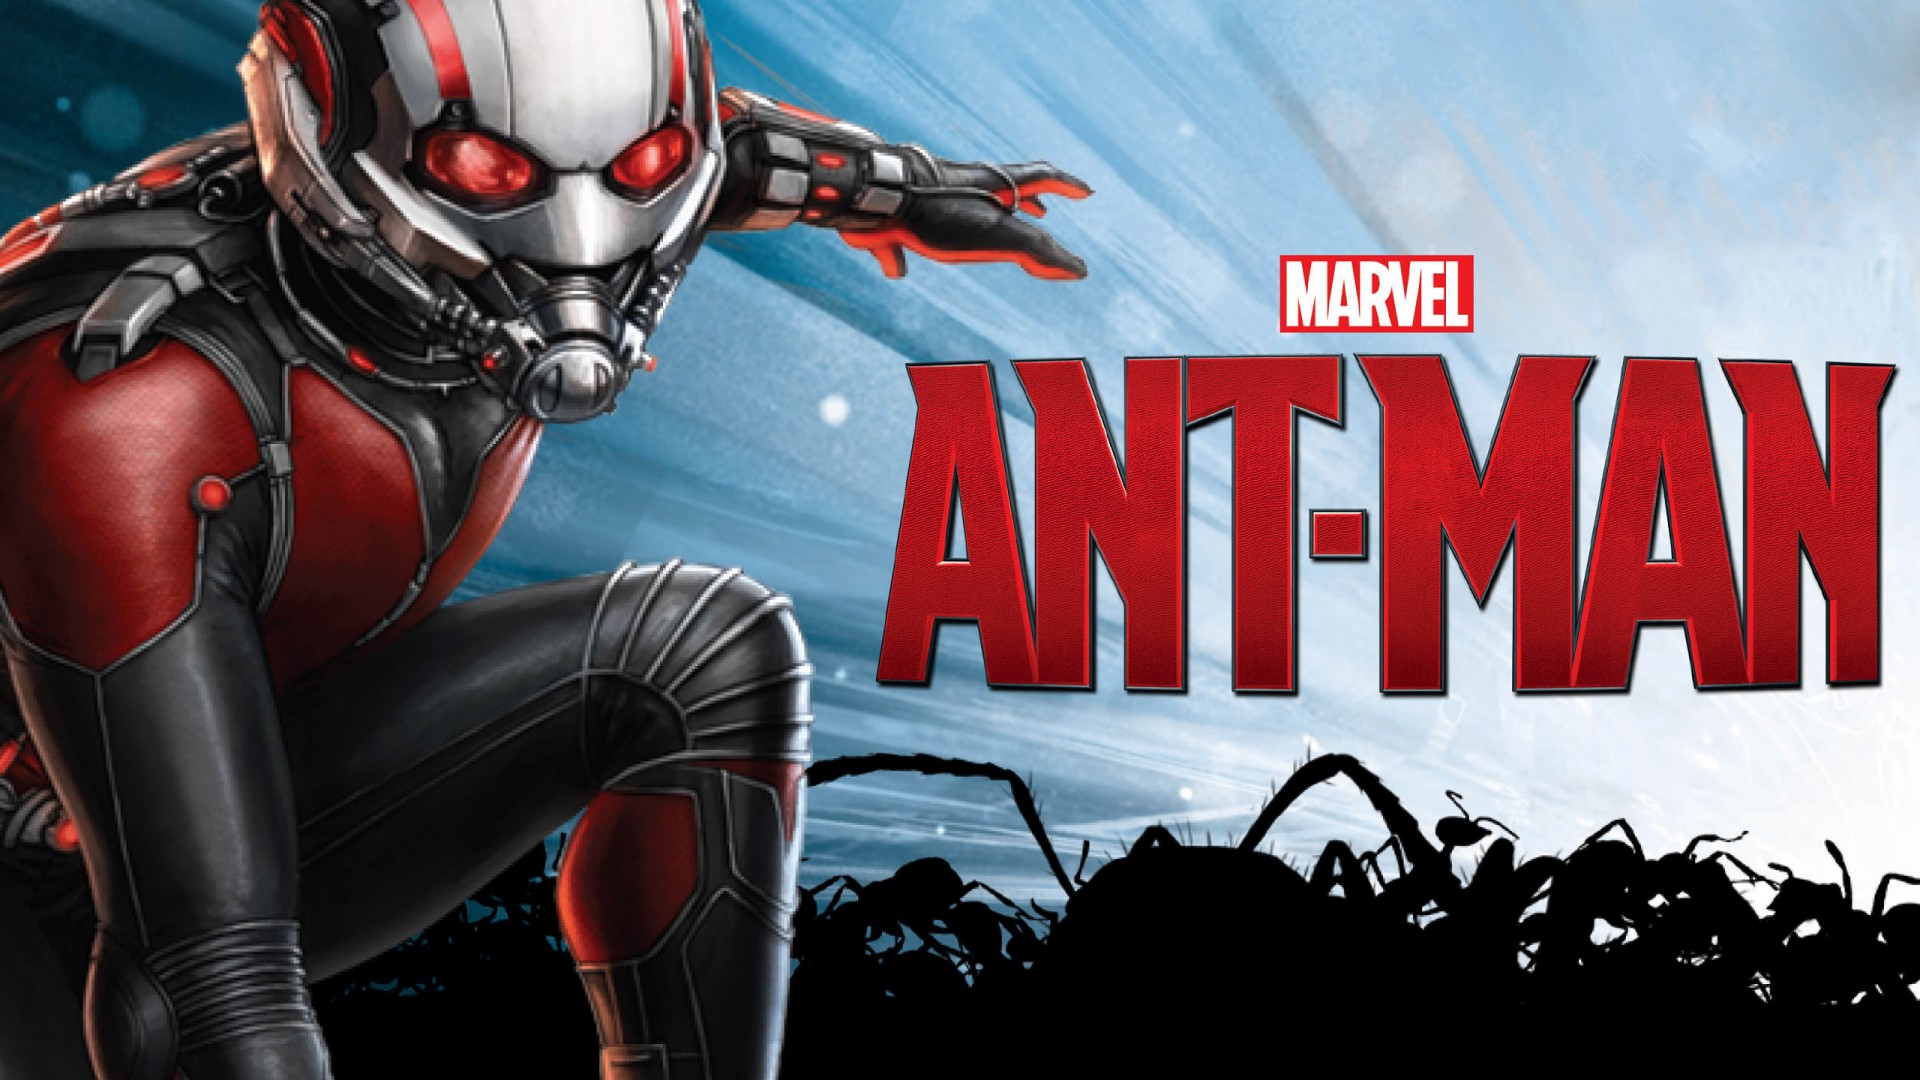 Marvel Ant Man 2015 Movie Poster HD Wallpaper